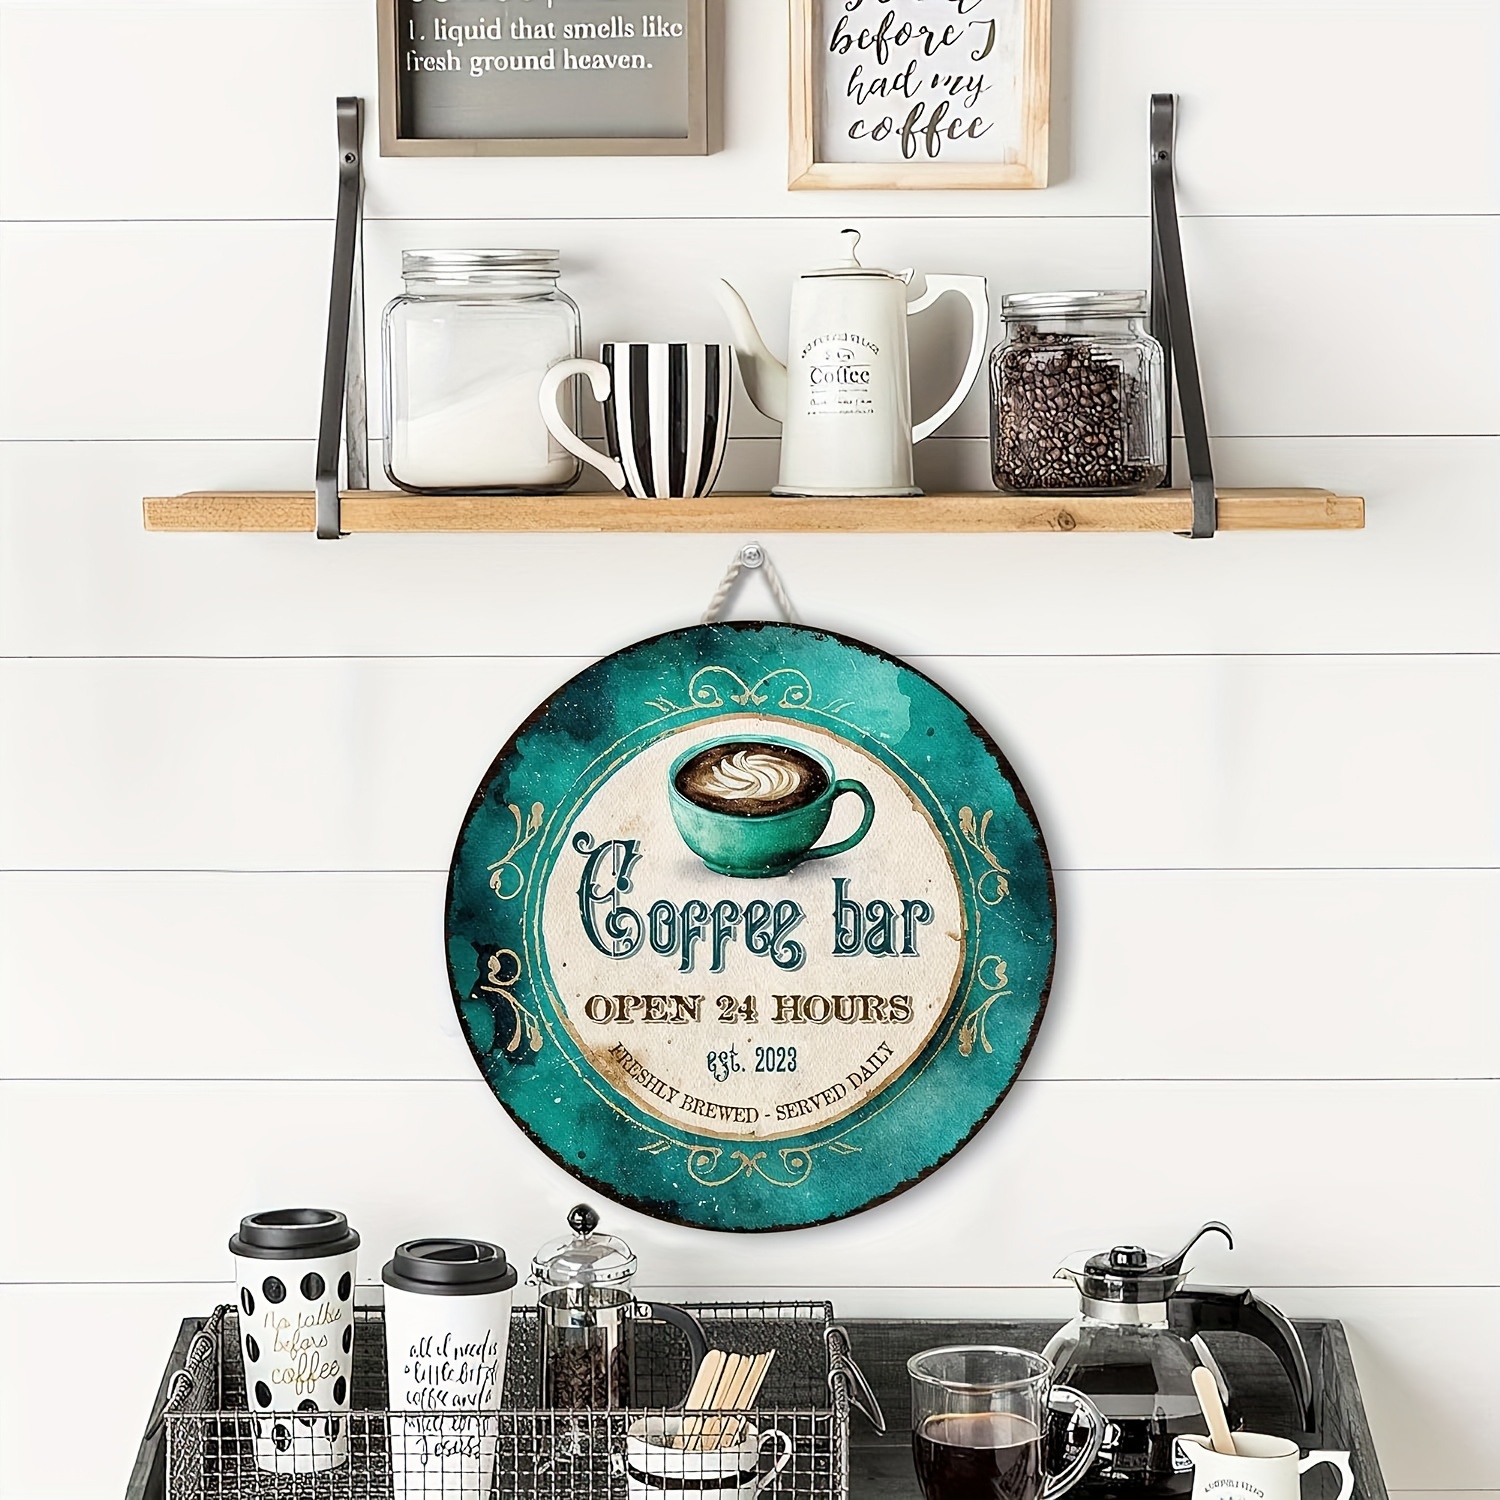 Coffee and Tea Bar Wood Sign | Coffee Bar Decor | Coffee | Tea | Wall Decor  | Home Decor | Wood Sign | Fresh Brewed Decor